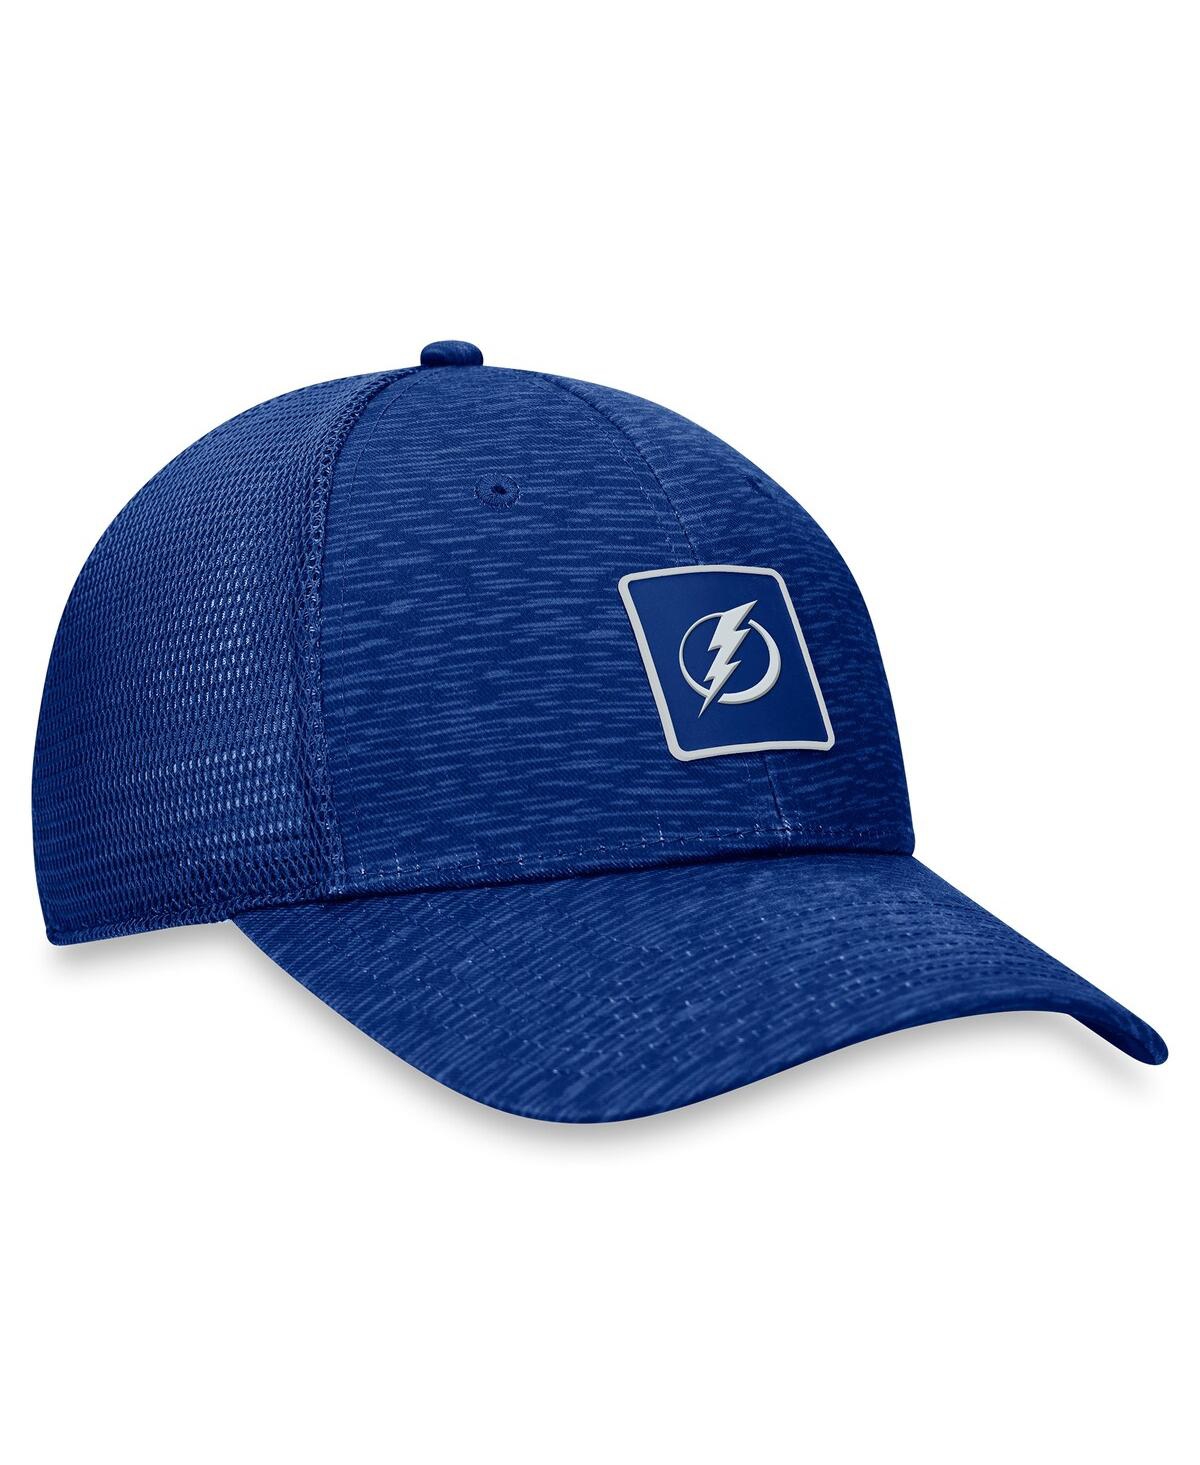 Shop Fanatics Men's And Women's  Blue Tampa Bay Lightning Authentic Pro Road Trucker Adjustable Hat